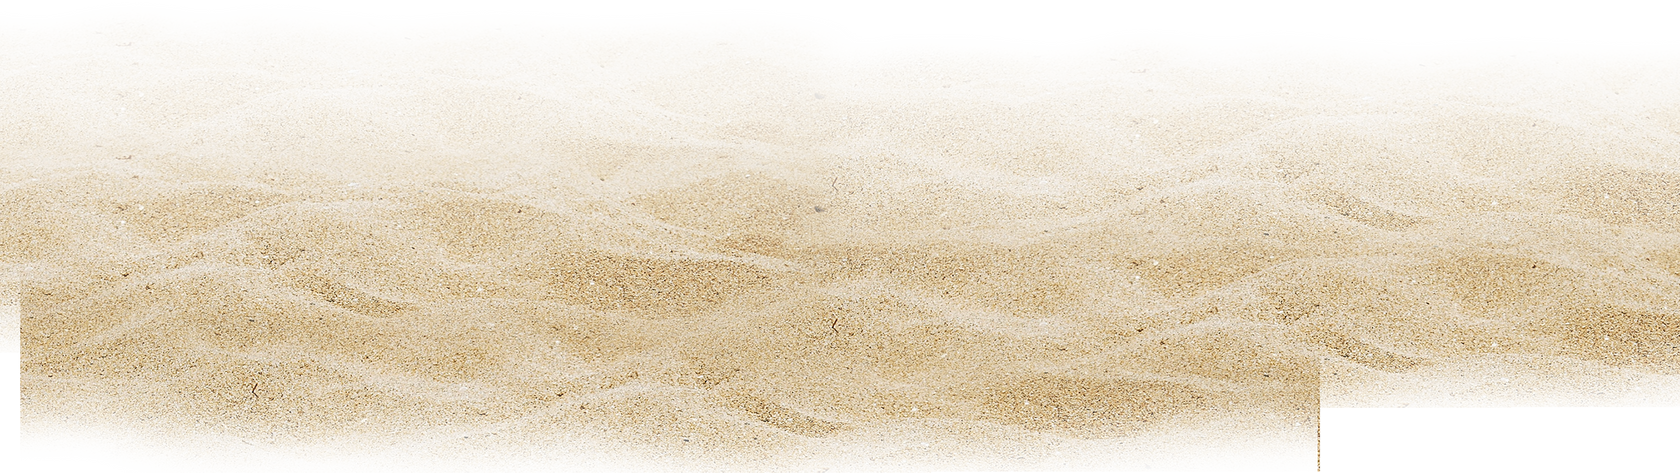 Sand overlay